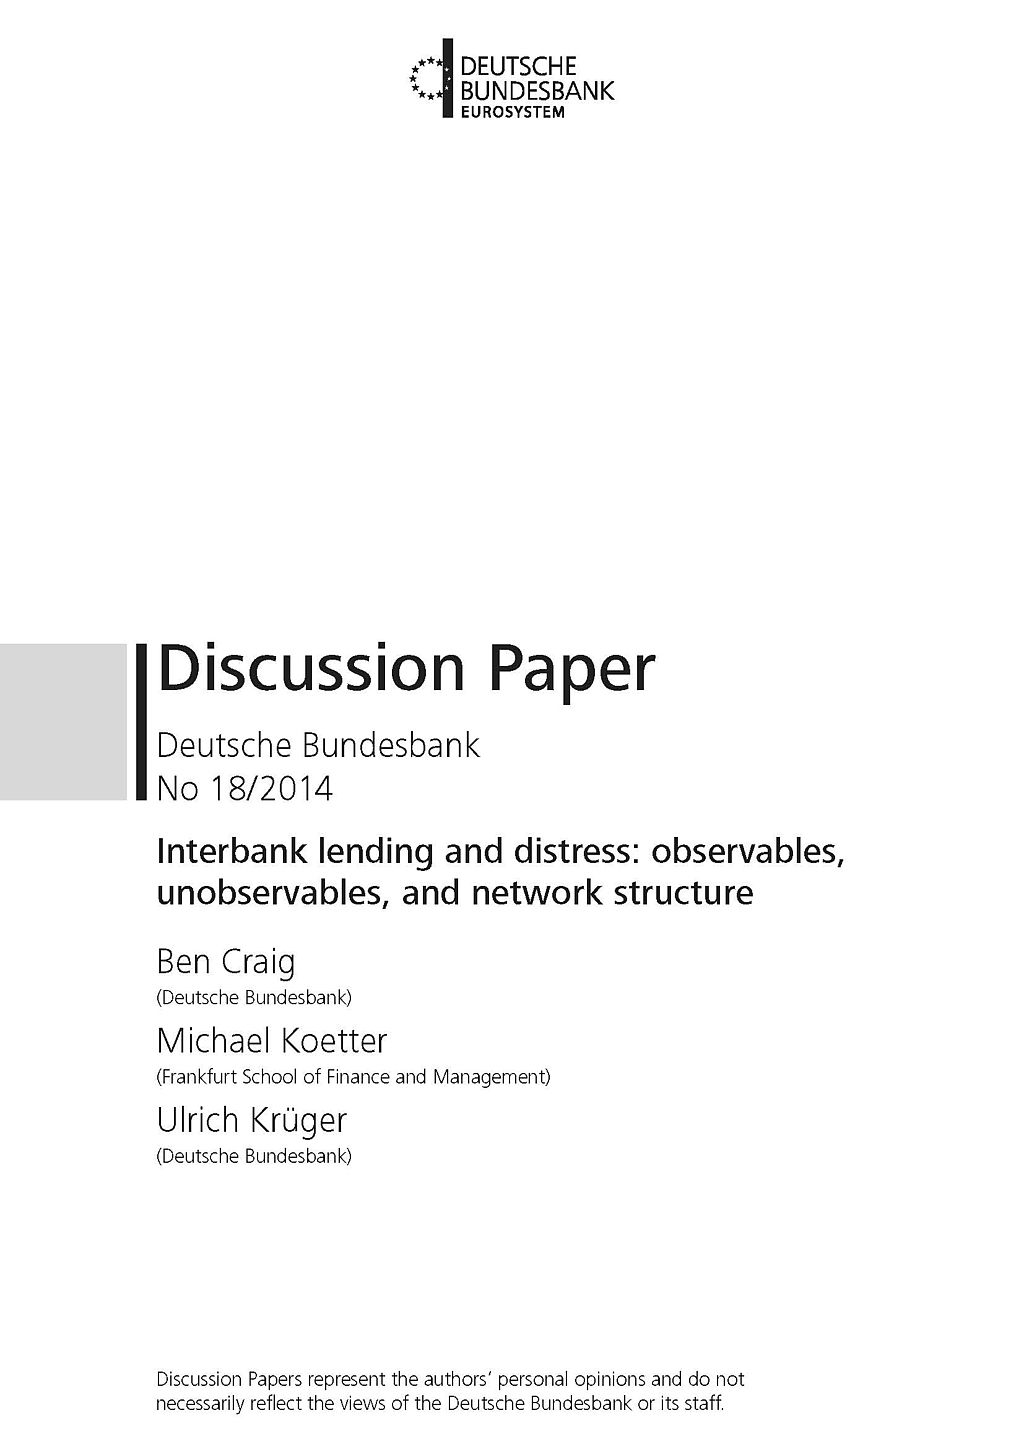 cover_Deutsche-Bundesbank-Discussion-Paper_2014-18.jpg